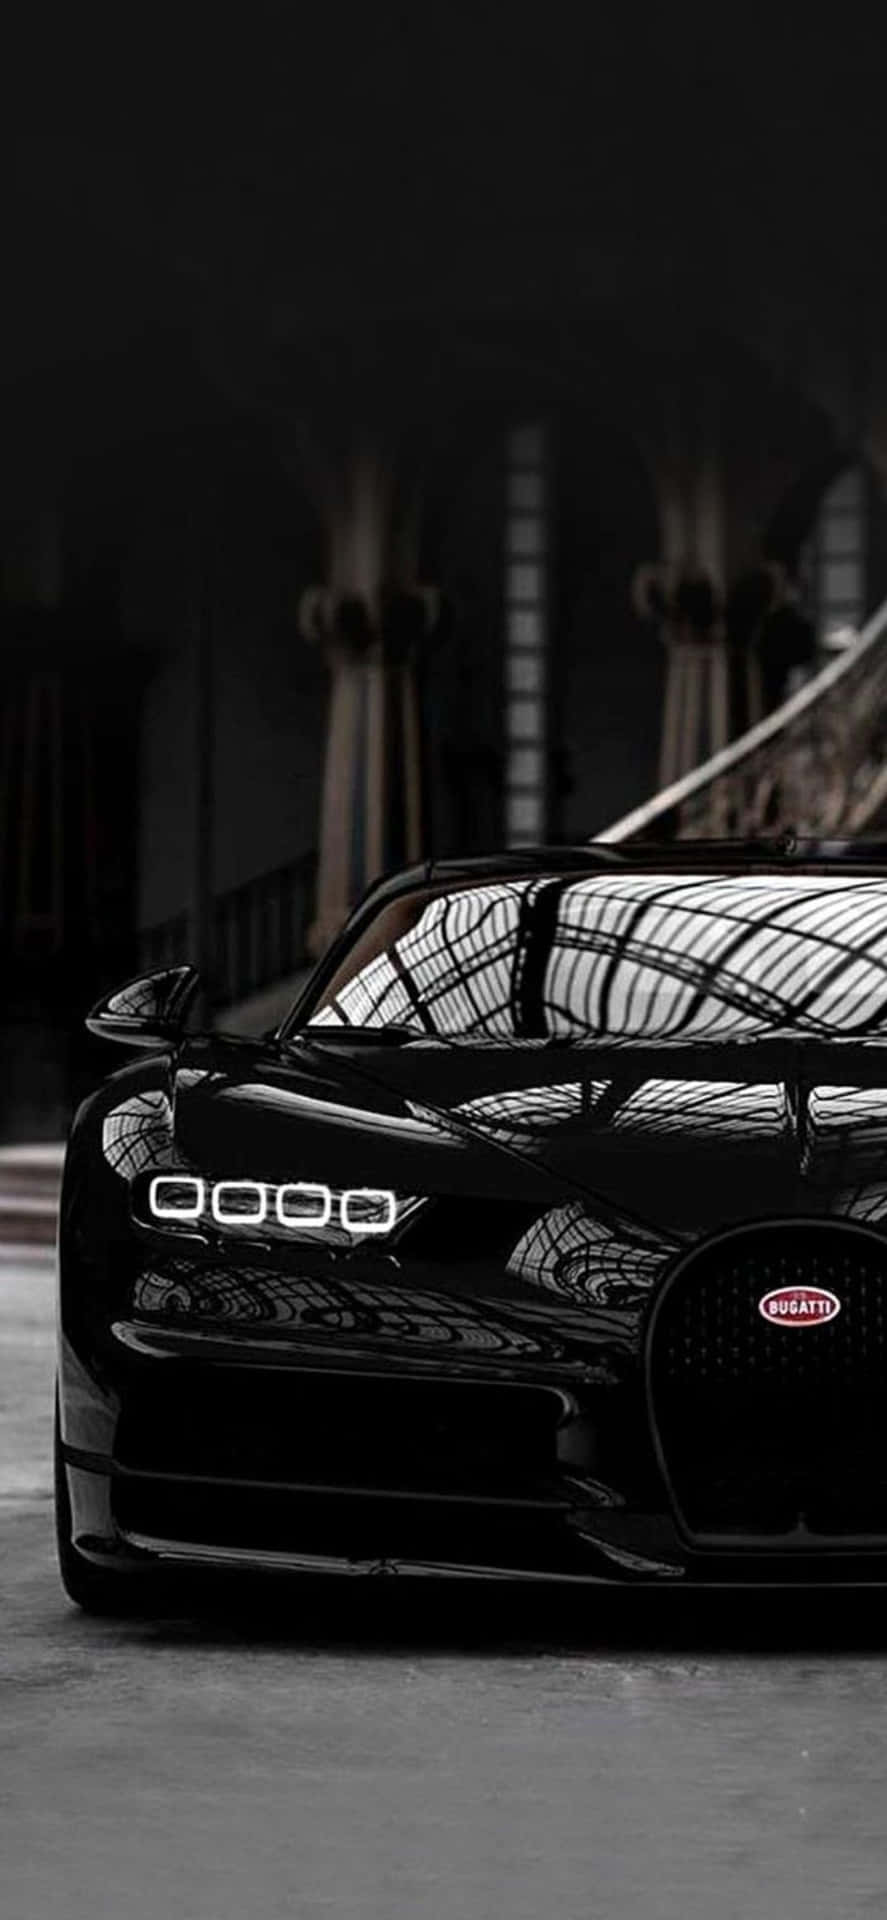 Bugatti classic style on the Iphone XS